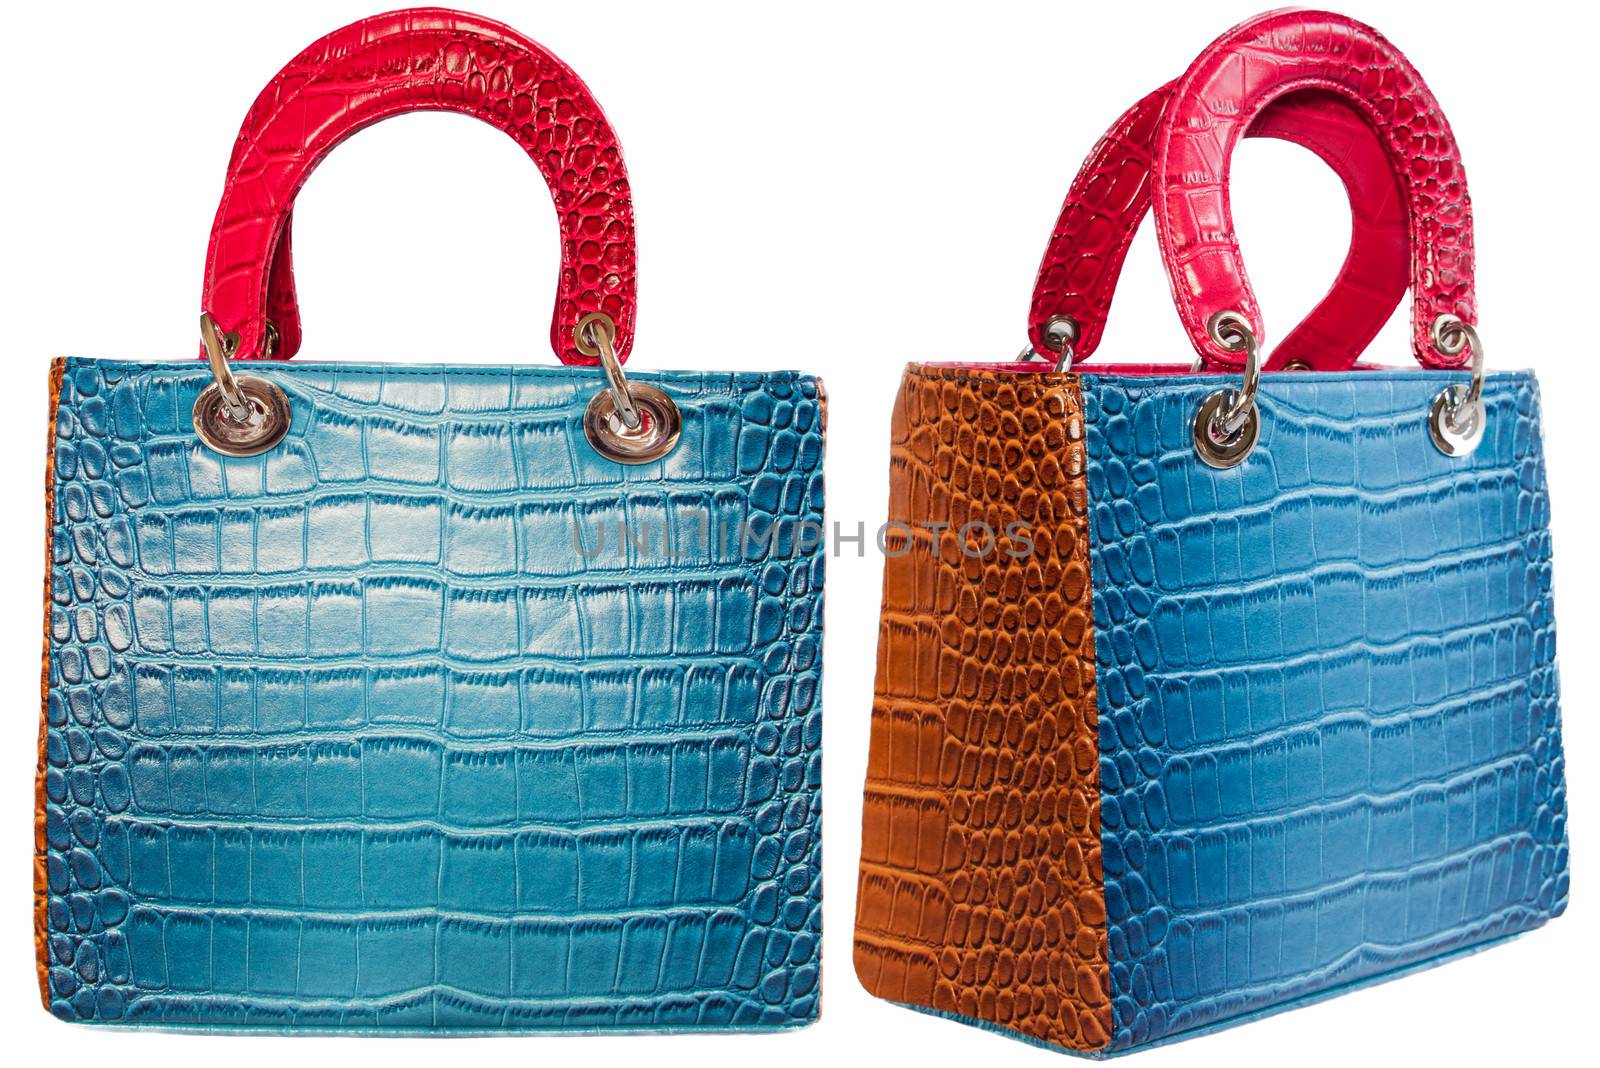 Square female handbags by GryT